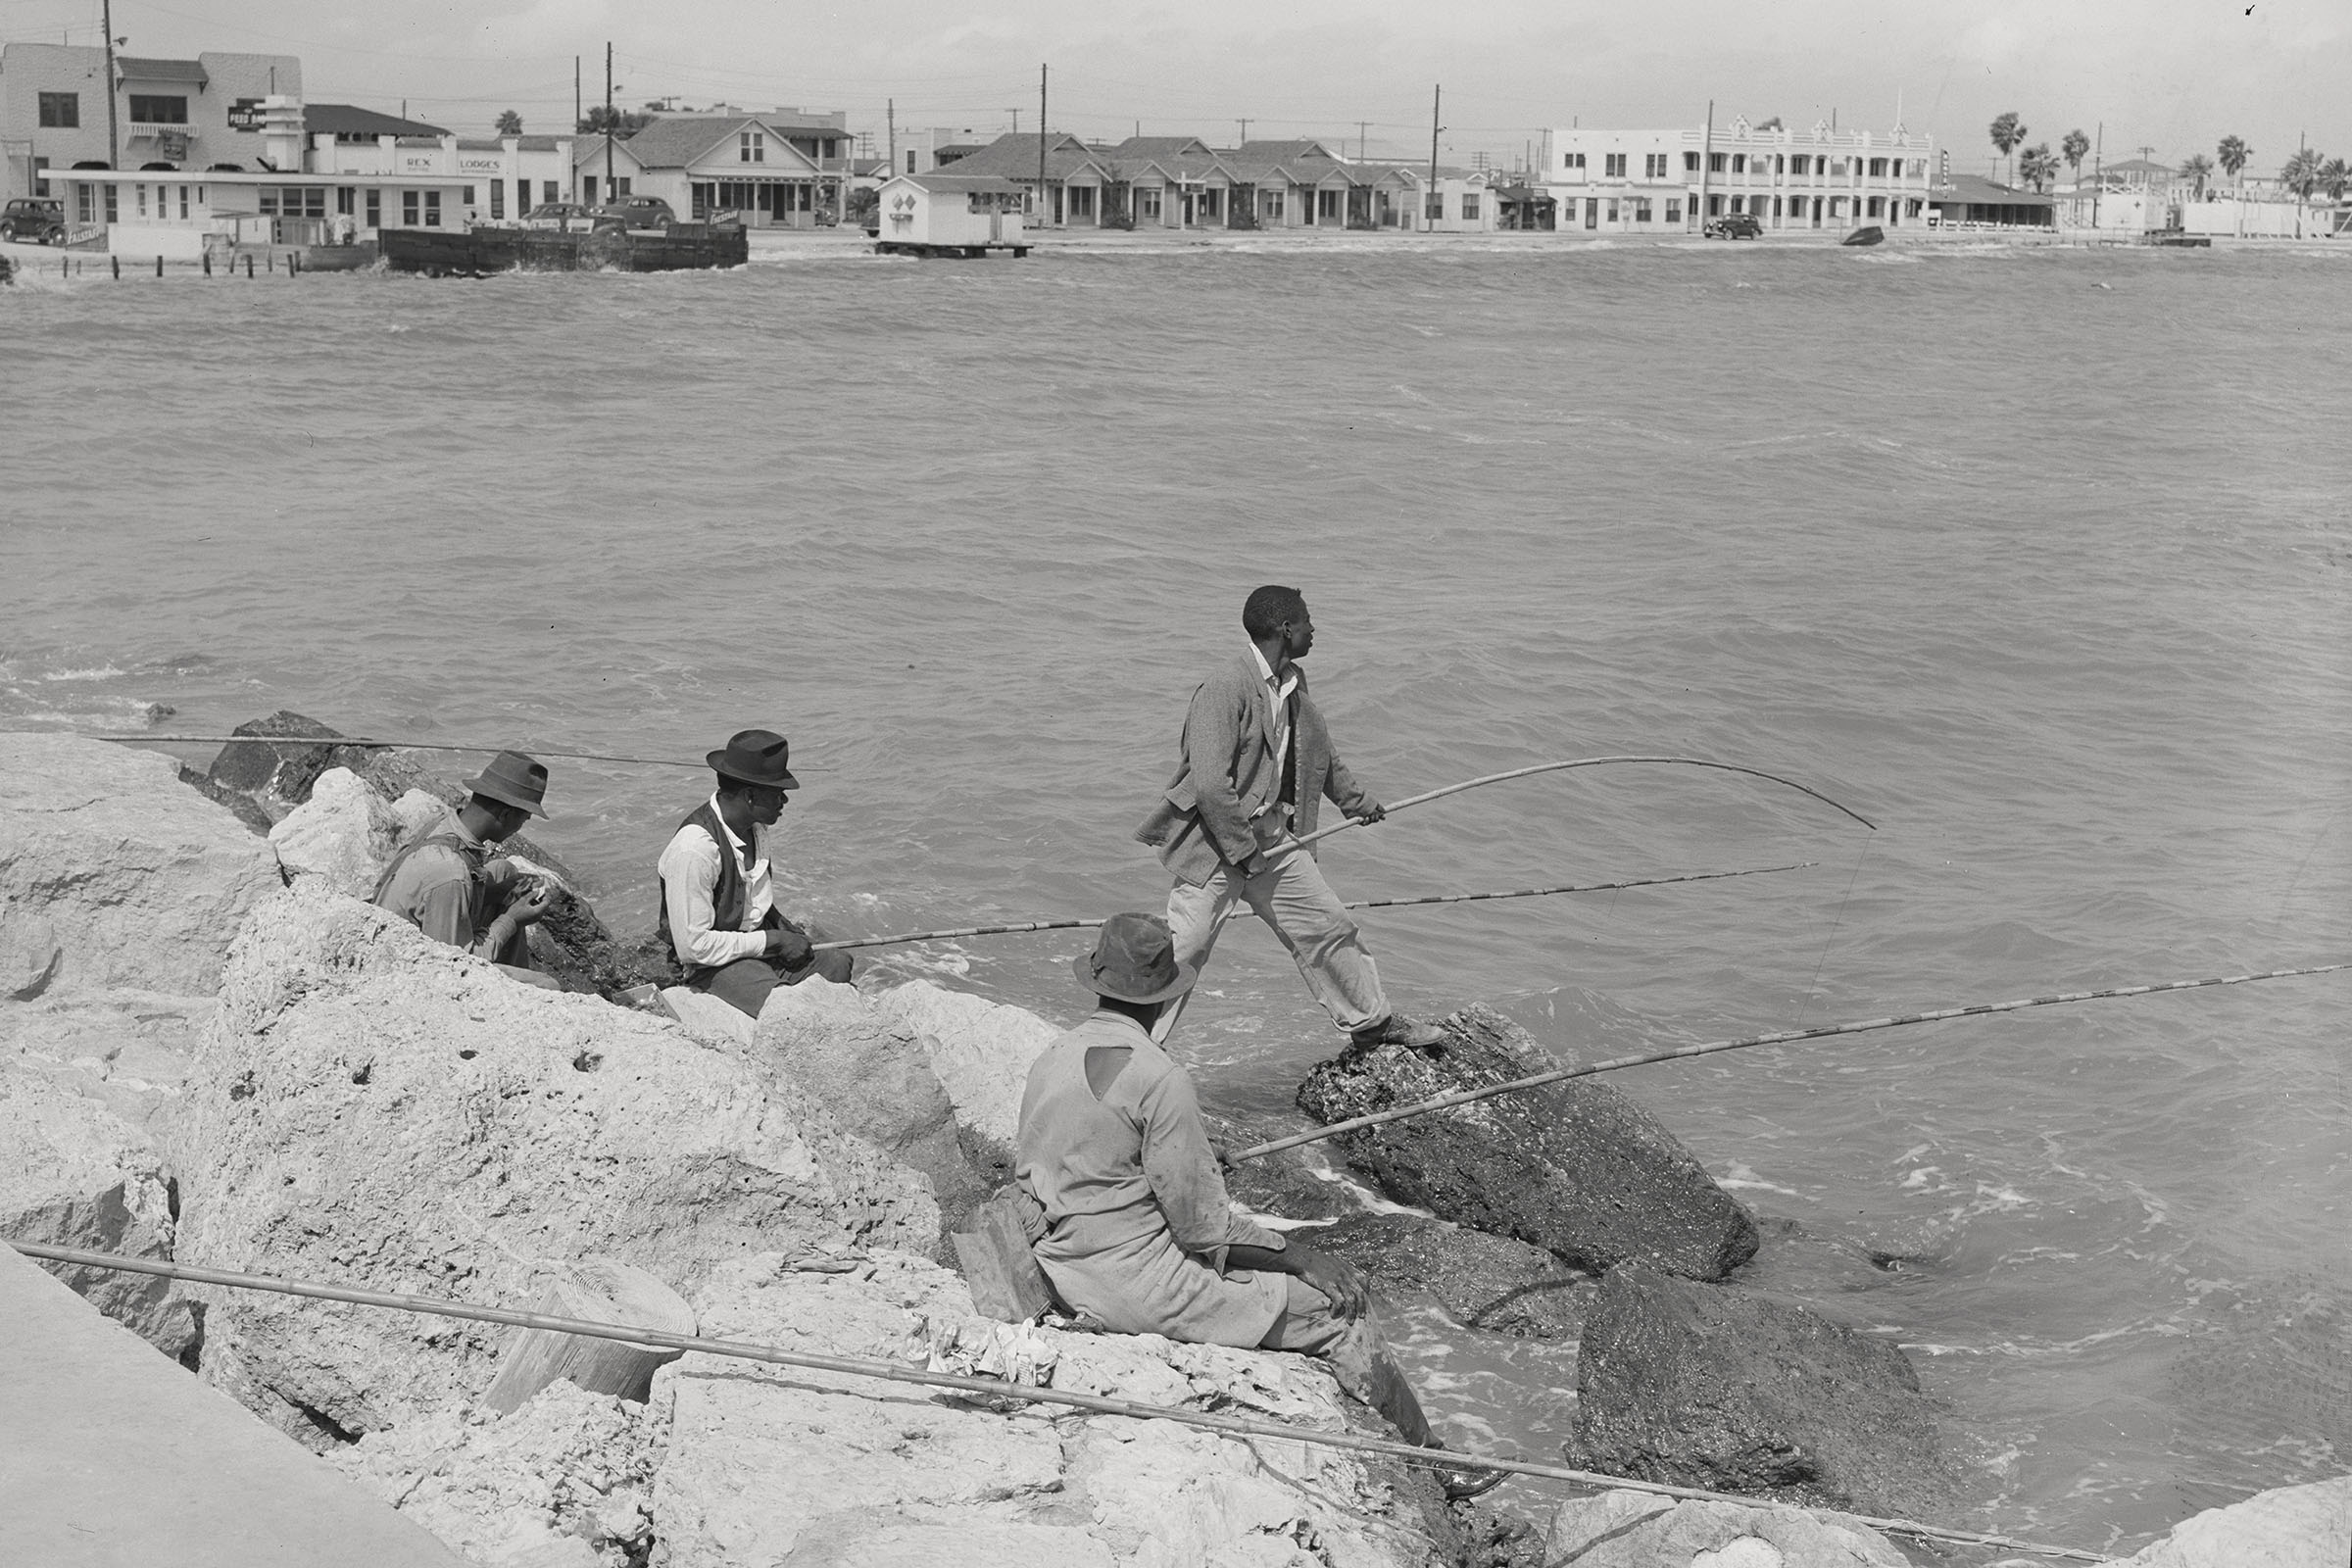 Men fish off of a rock jetty in Corpus Christi Texas